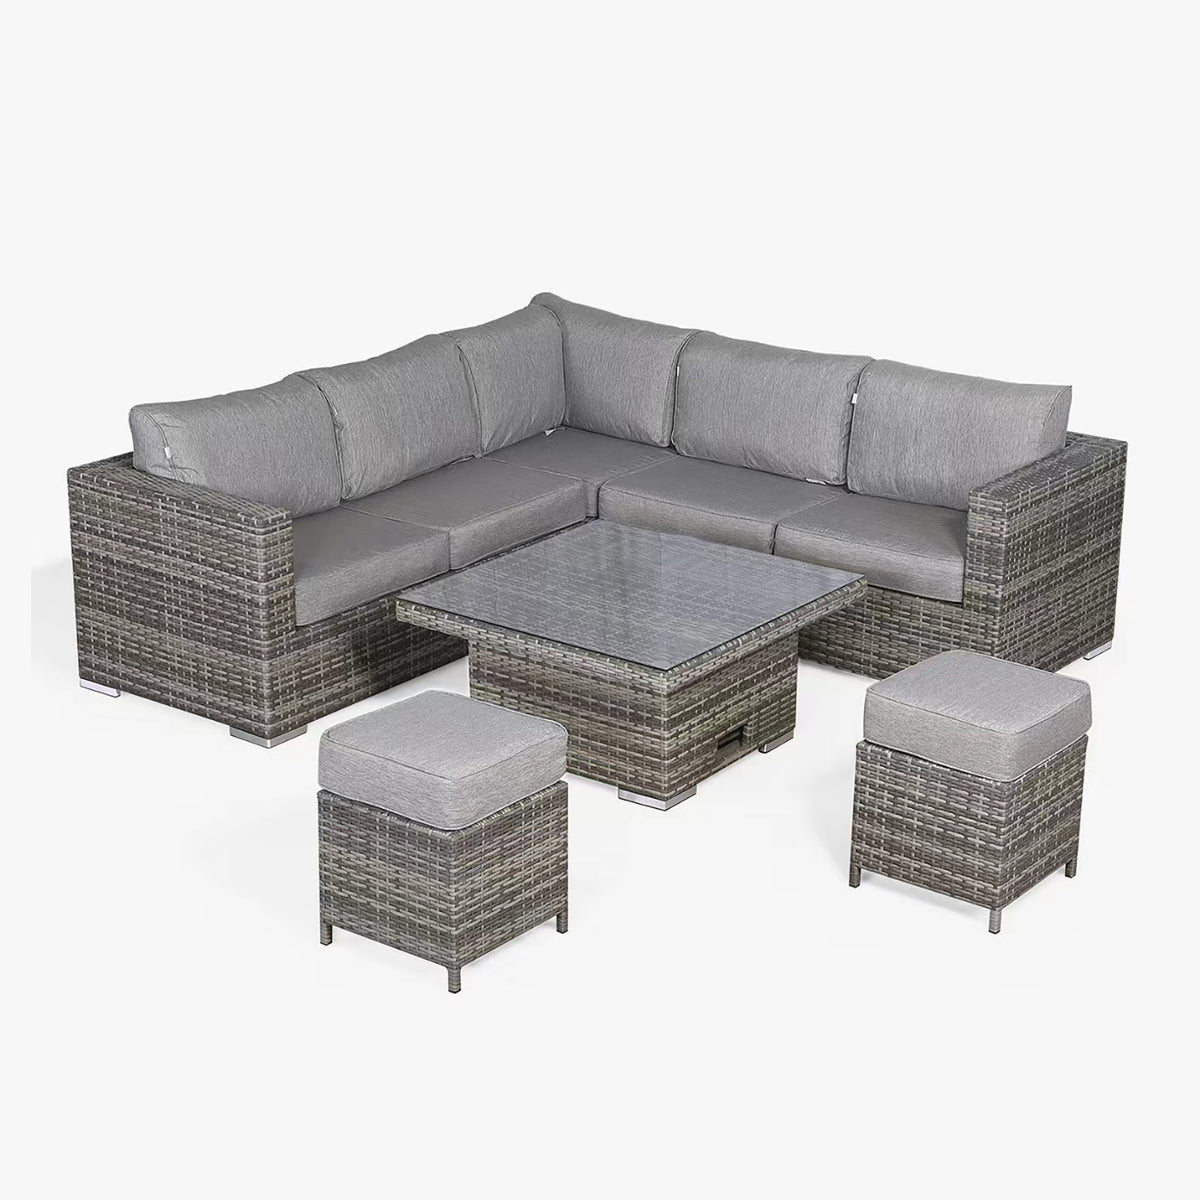 Rattan park Cambridge Square Corner Sofa Set with Rising Table in Stone Browne Grey weave